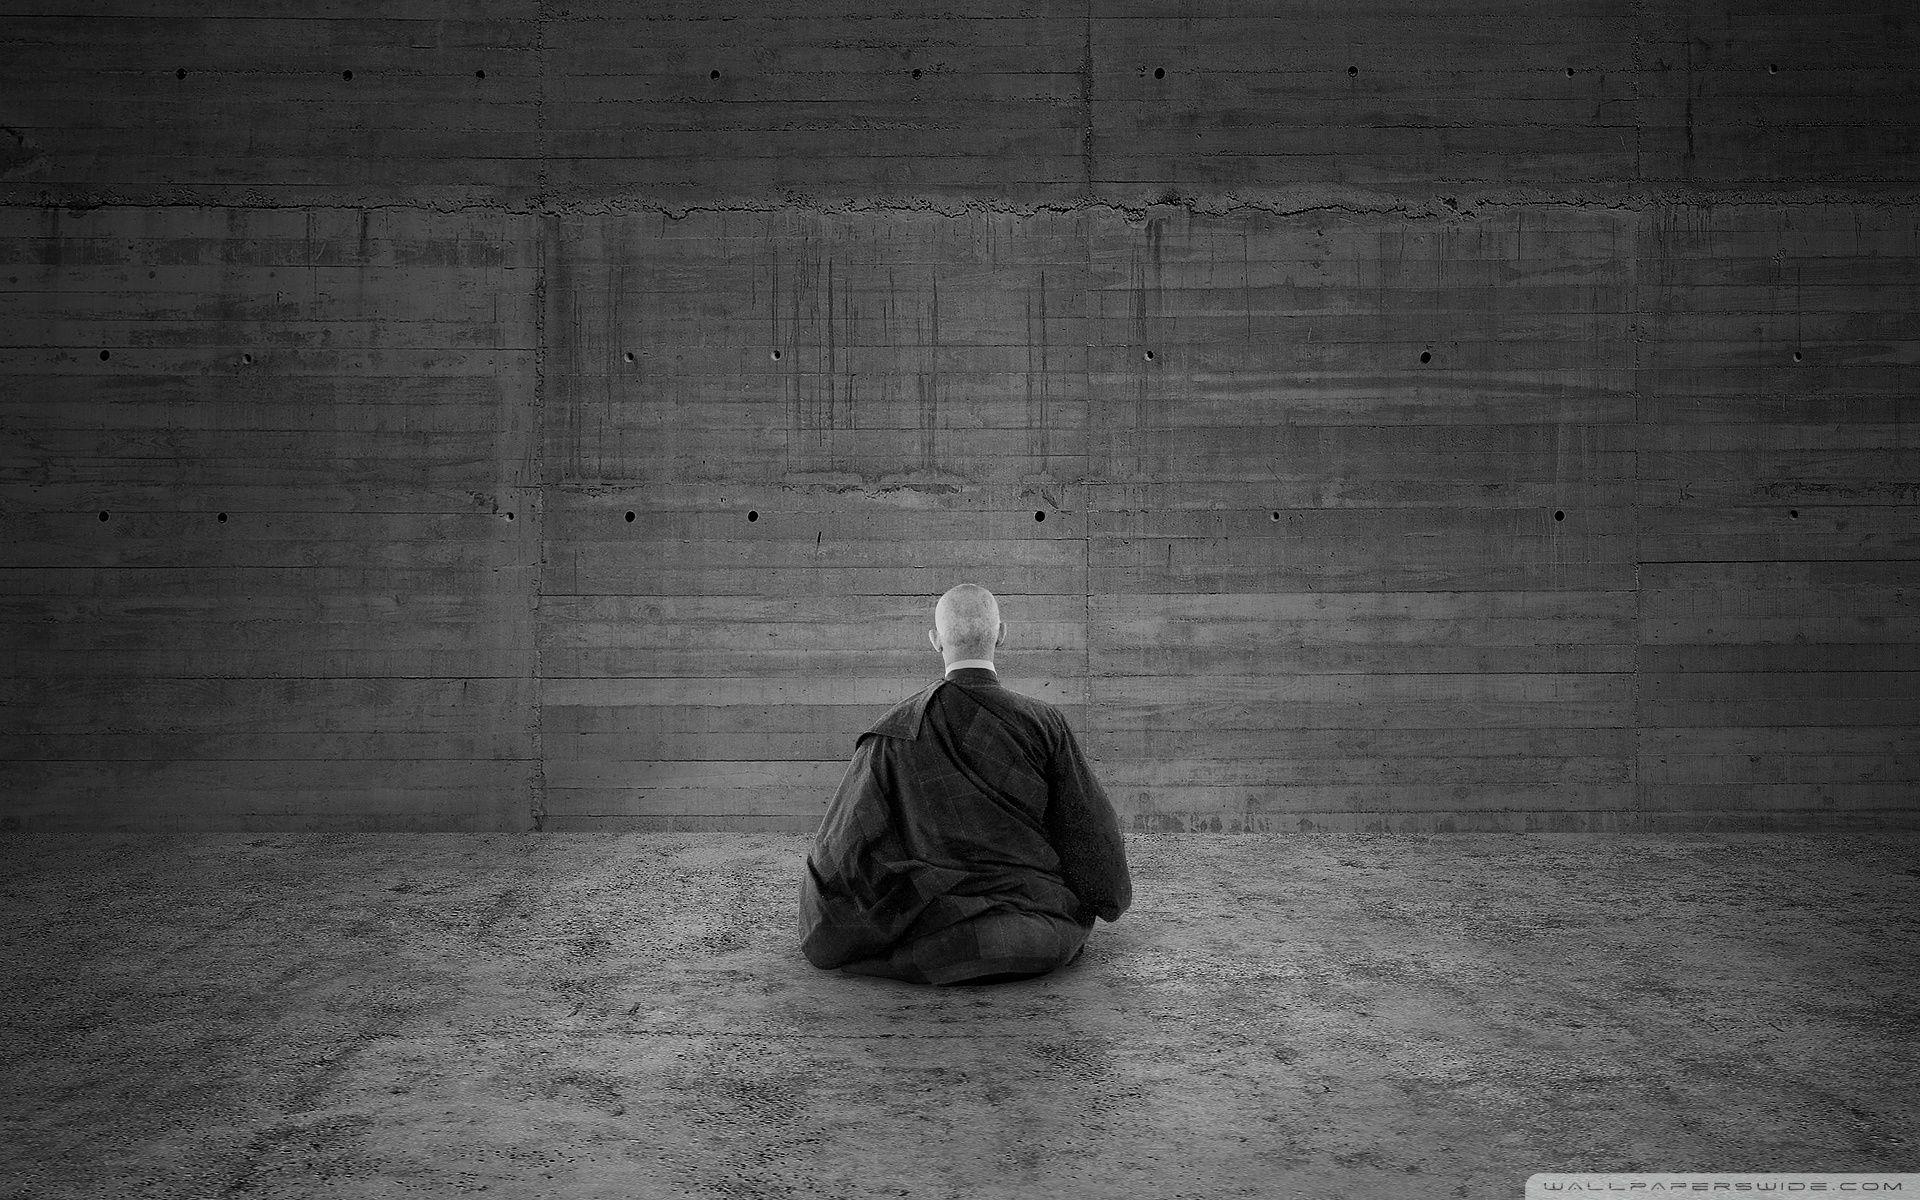 Wallpaper Download 5120x3200 Shaolin monk meditating  Meditation pictures  Monk meditation Om chanting